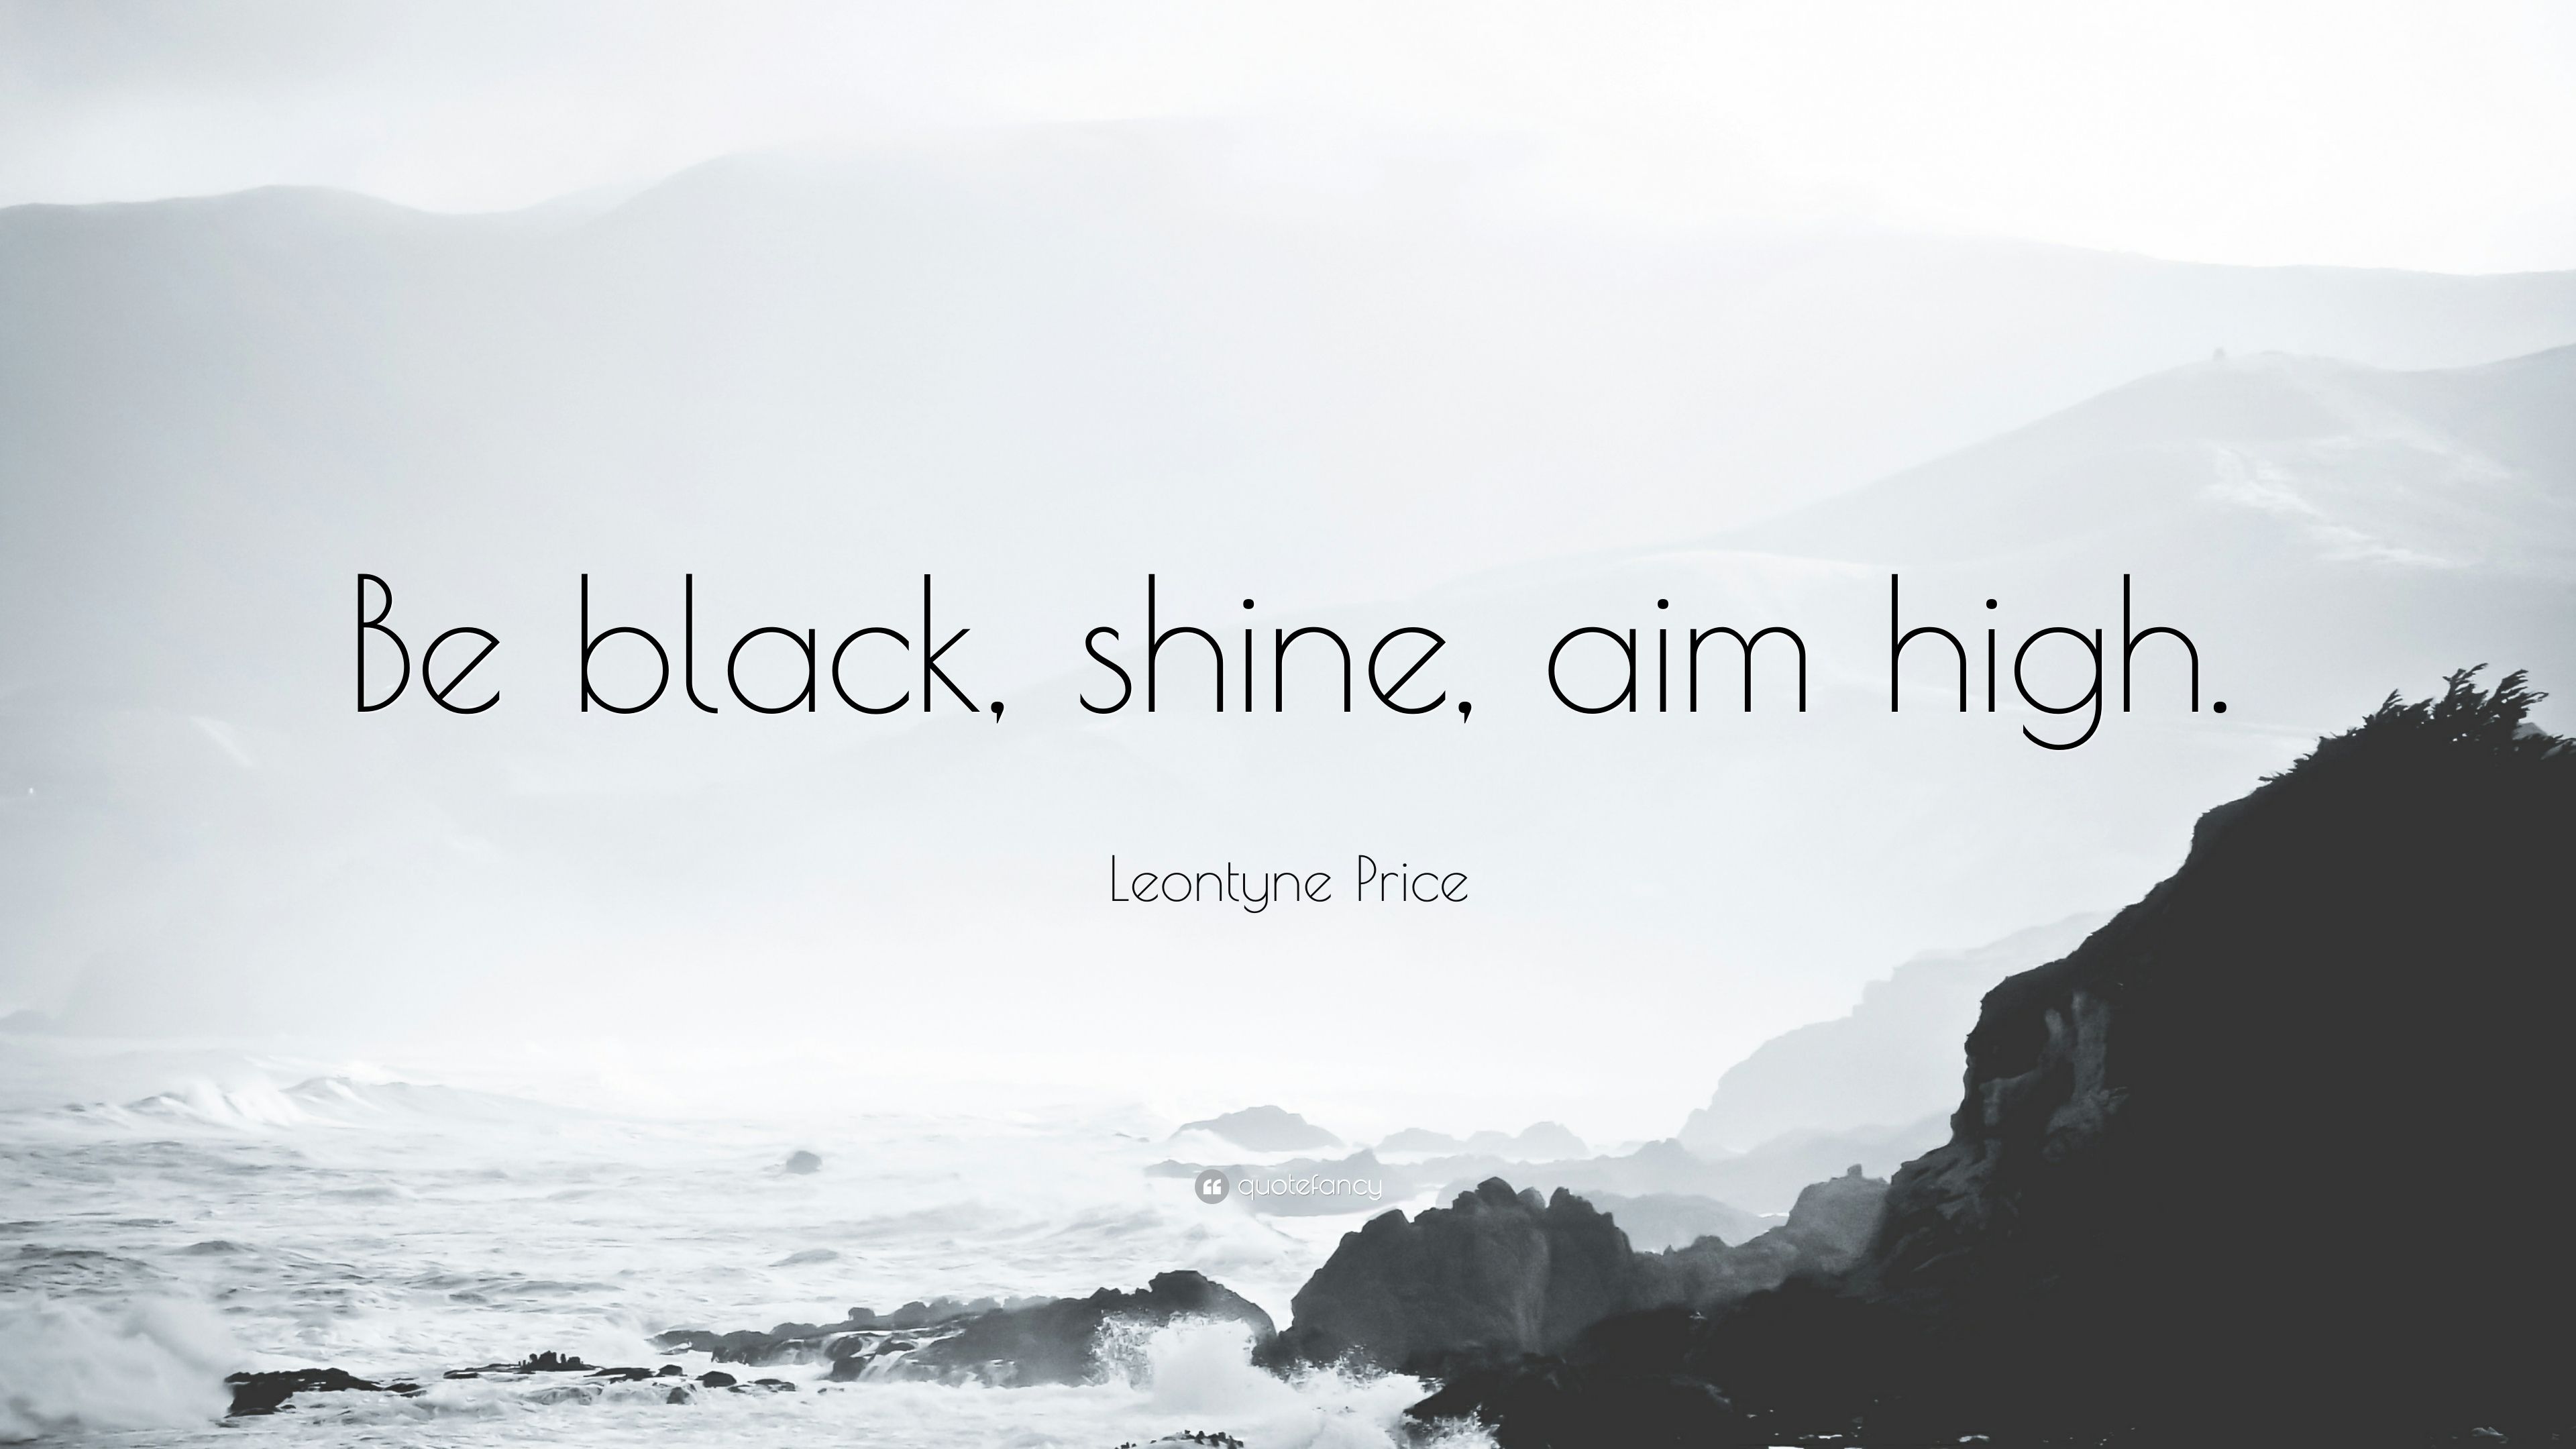 Leontyne Price Quote: “Be black, shine, aim high.” 7 wallpaper